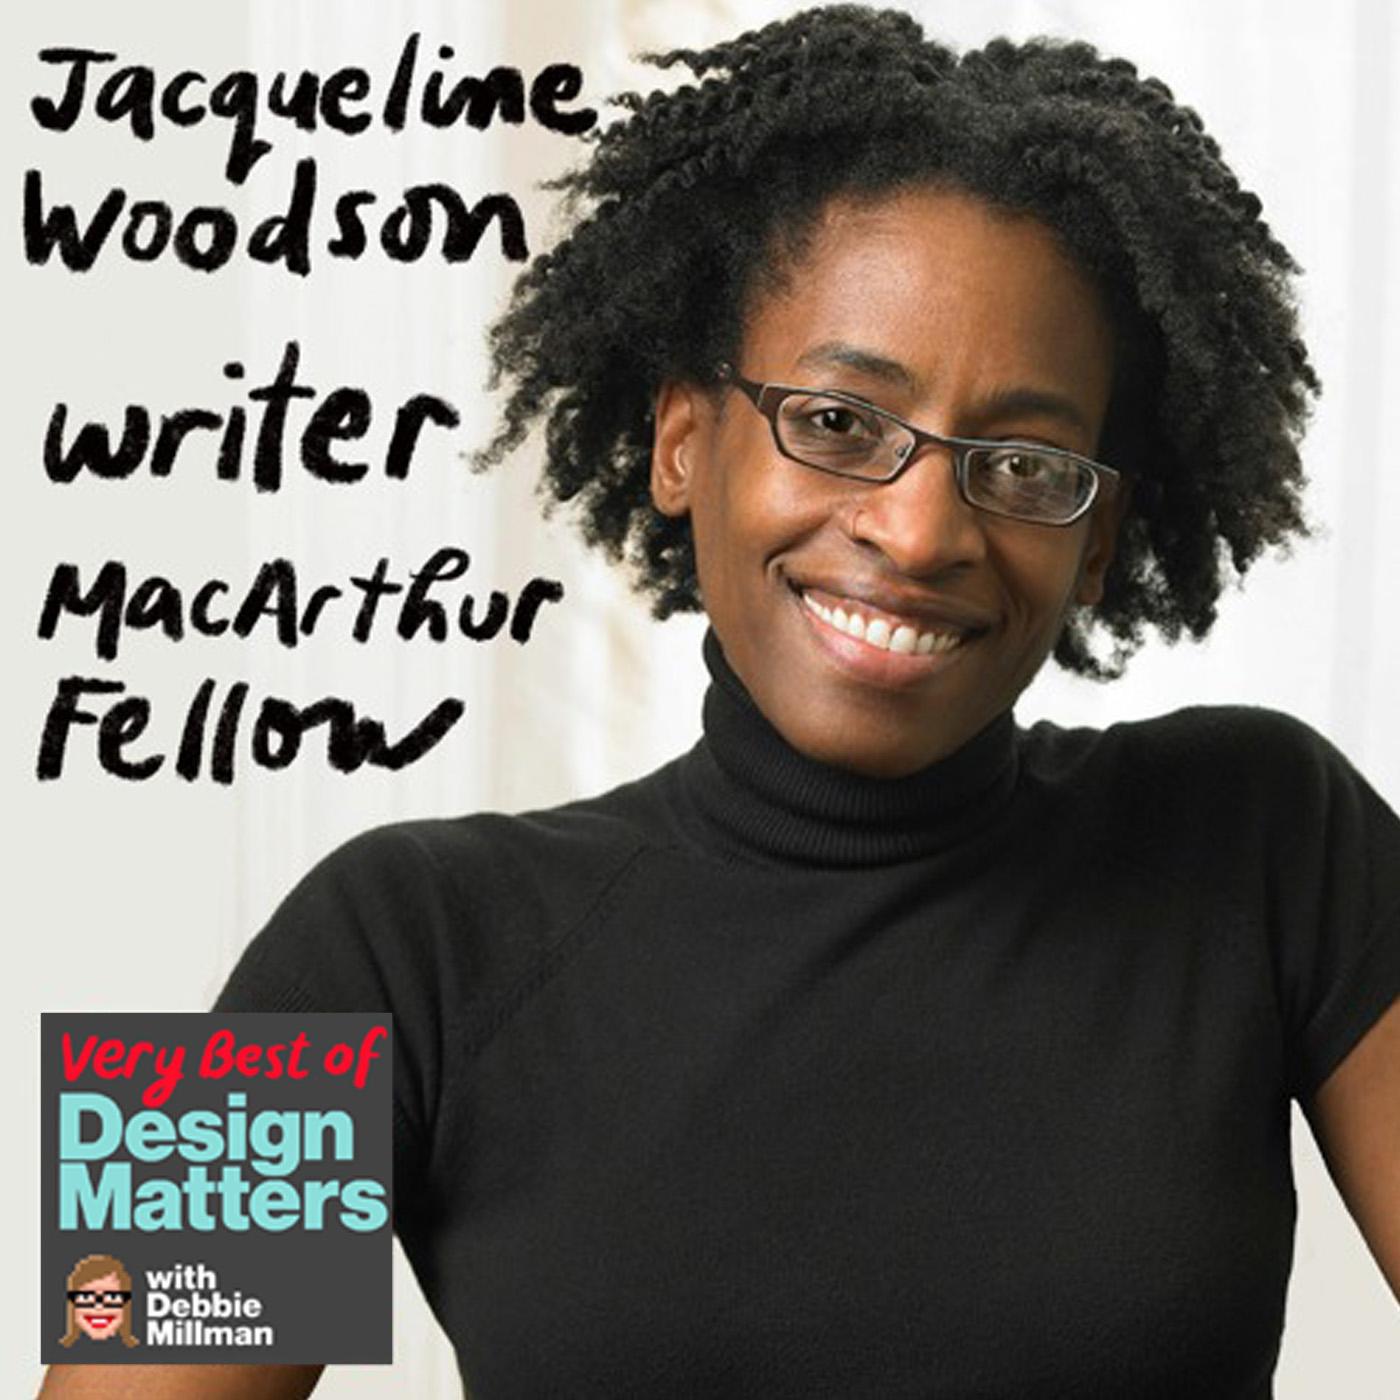 Thumbnail for "Best of Design Matters: Jacqueline Woodson".